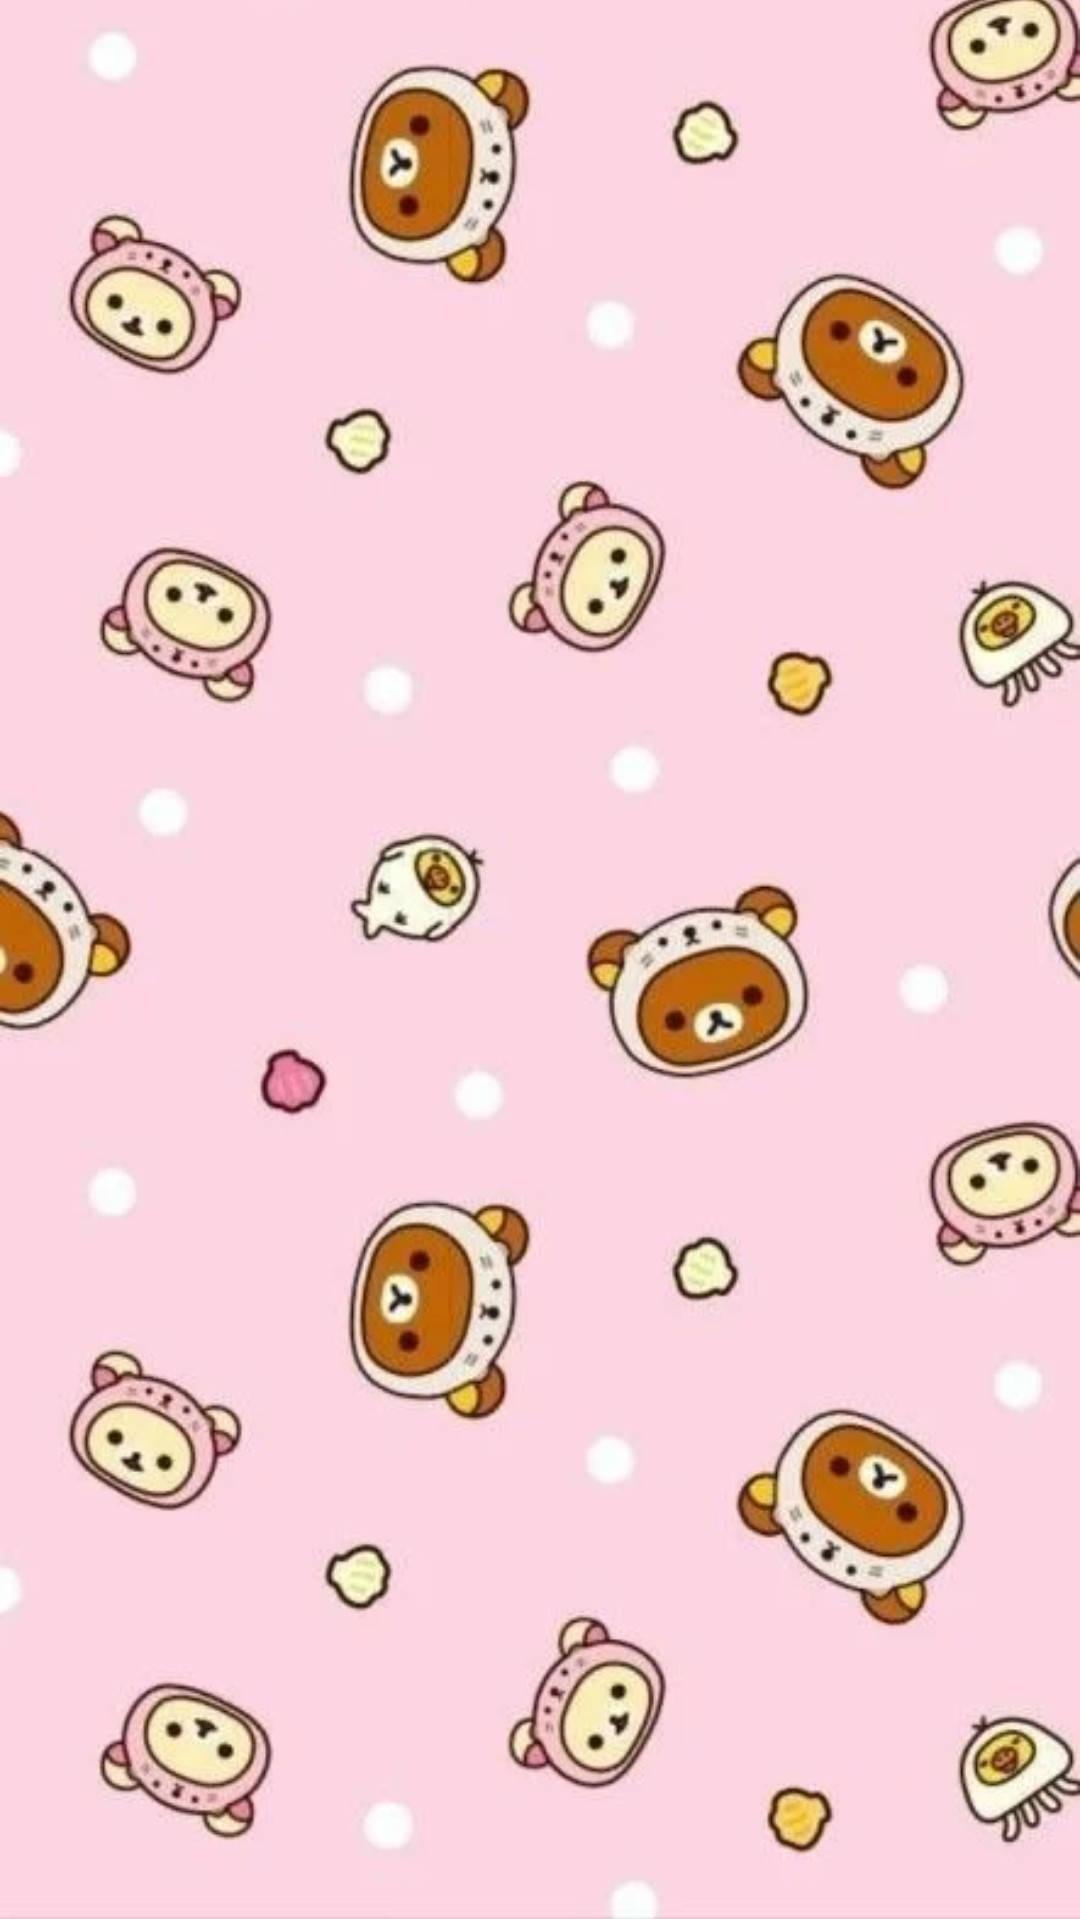 Enjoy The Sweet World Of Cute Sanrio Wallpaper